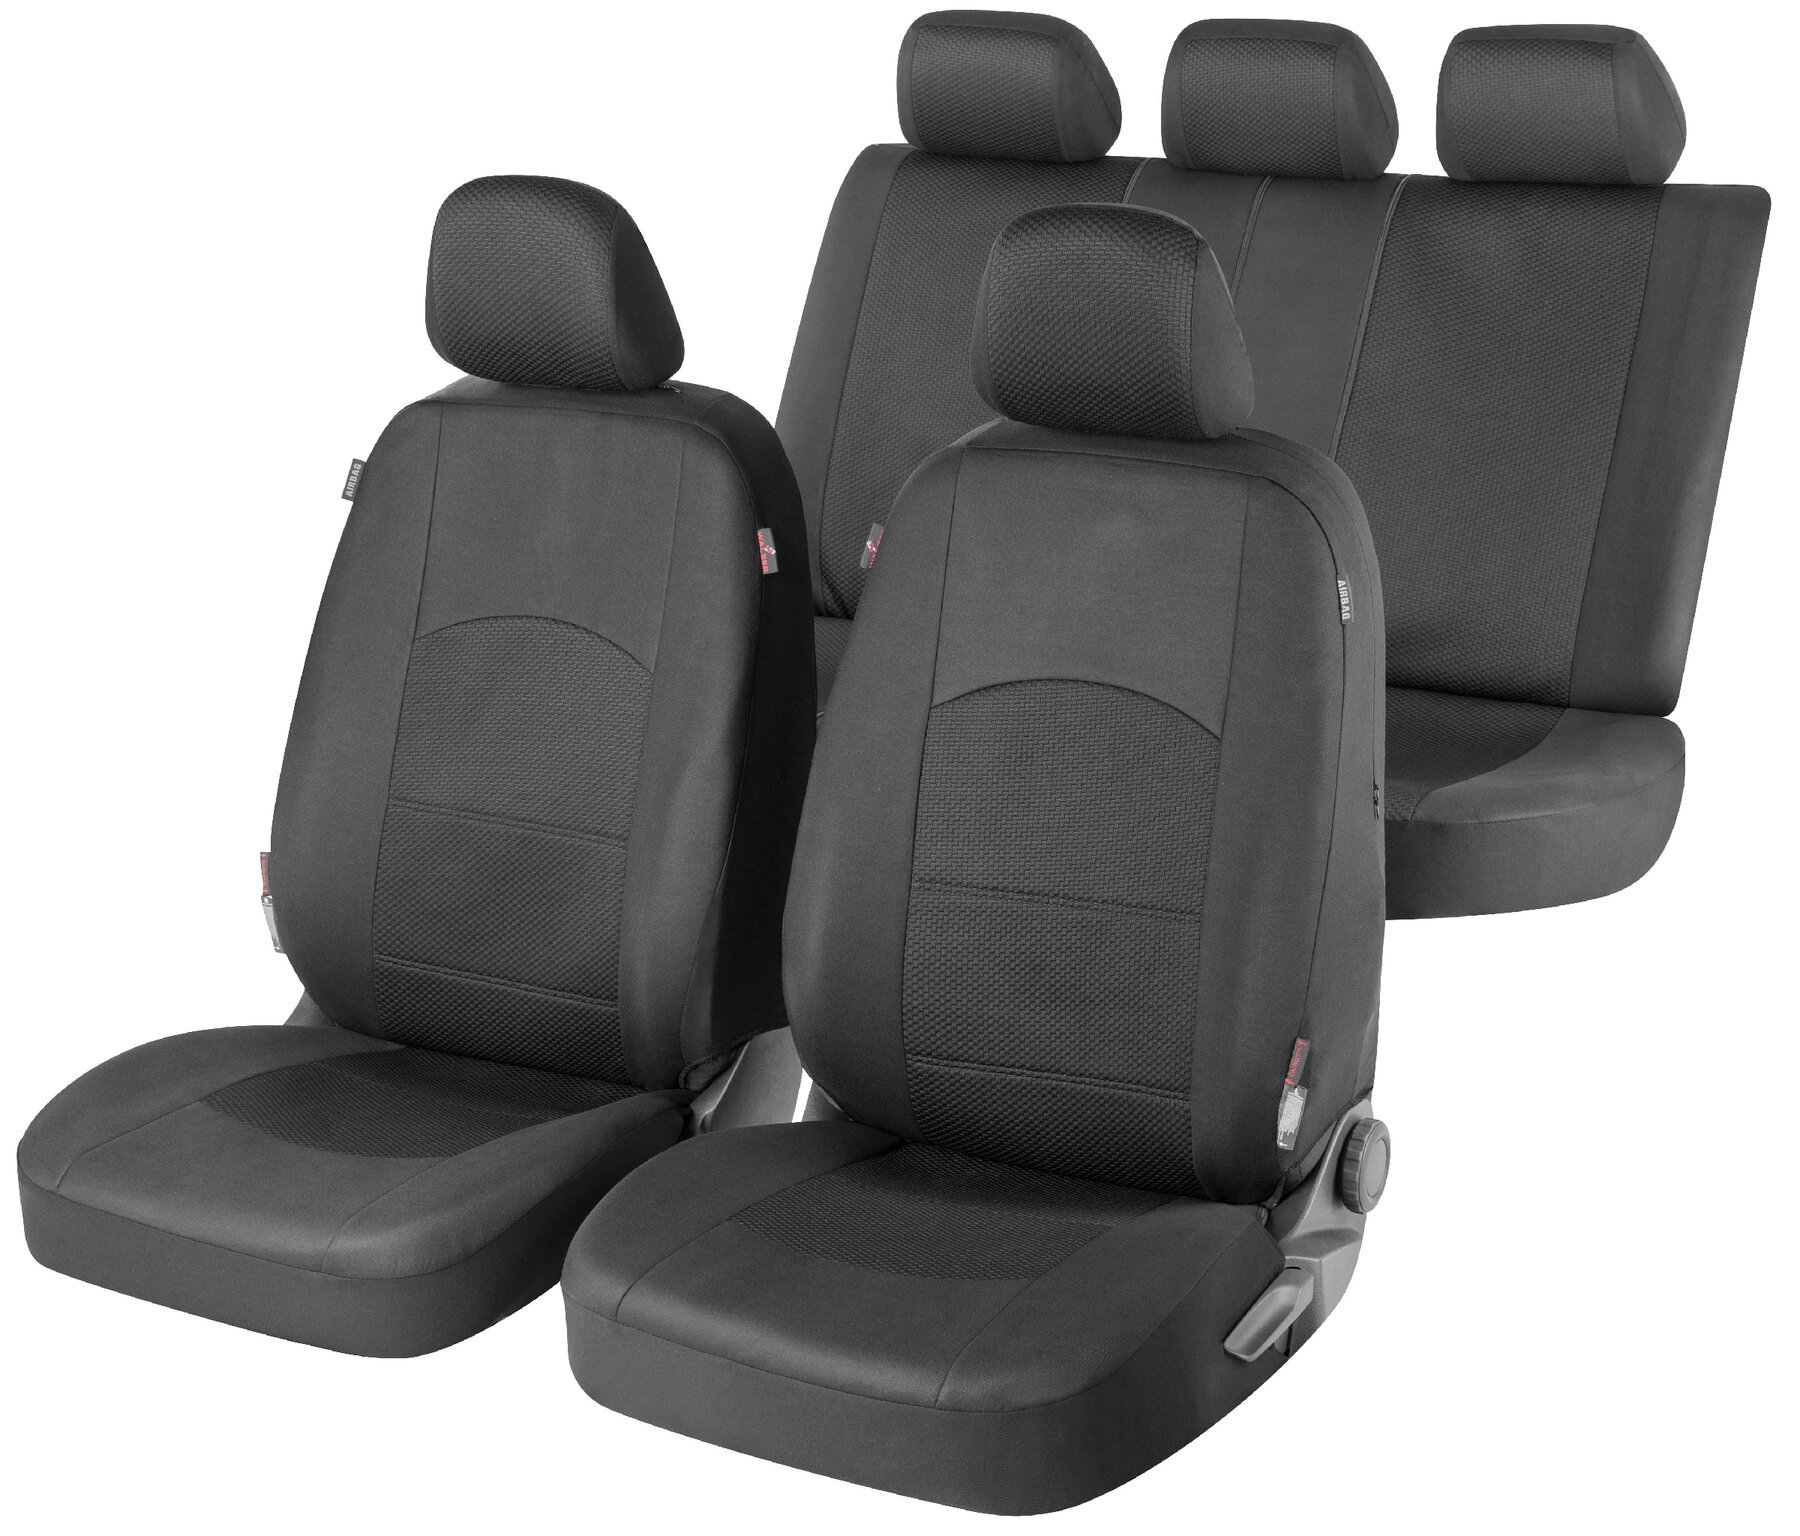 ZIPP IT Premium Derby car Seat covers with zipper system